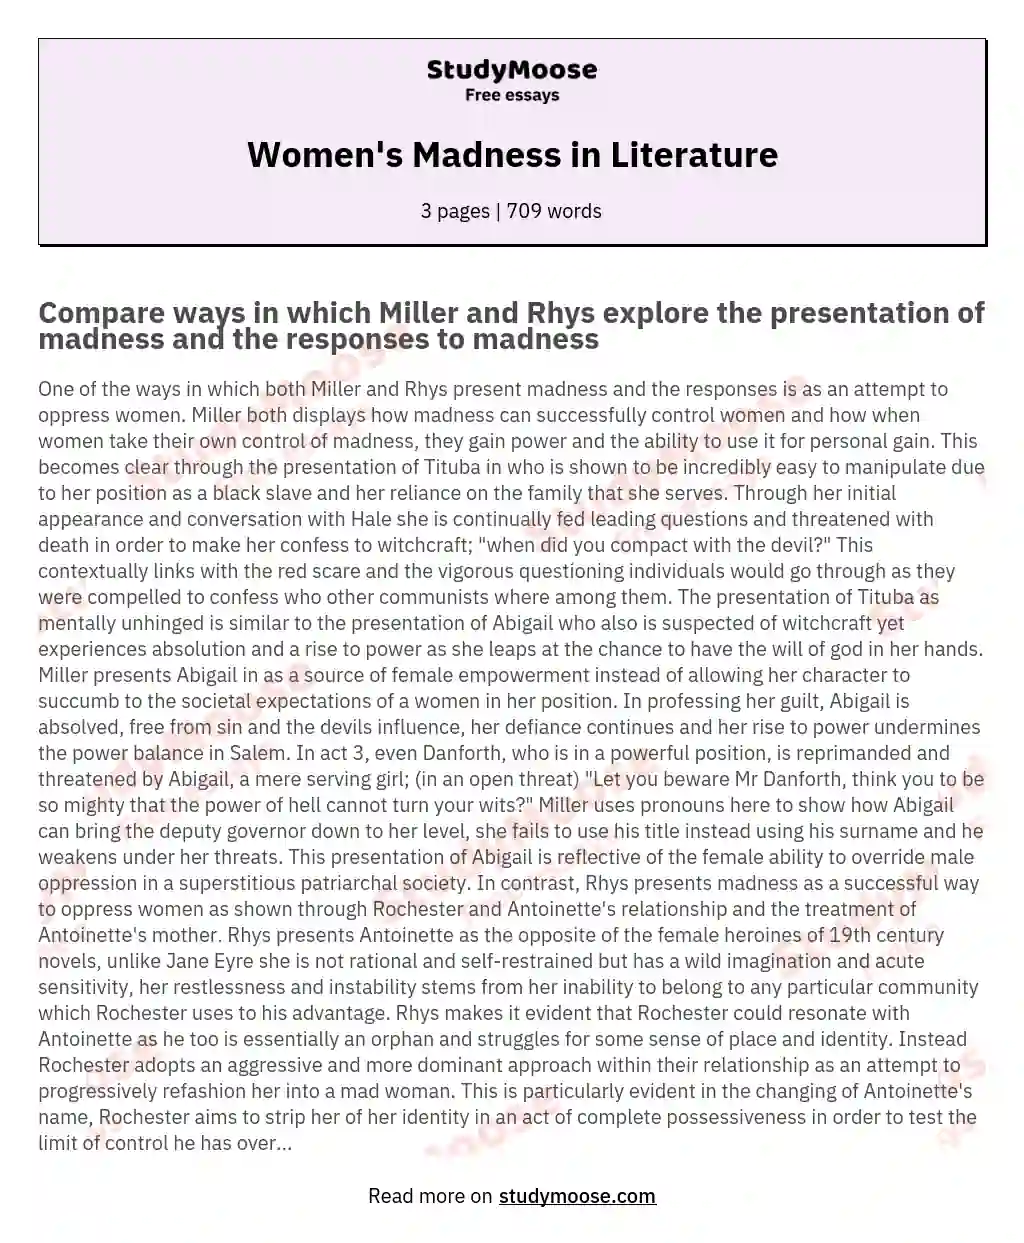 Women's Madness in Literature essay